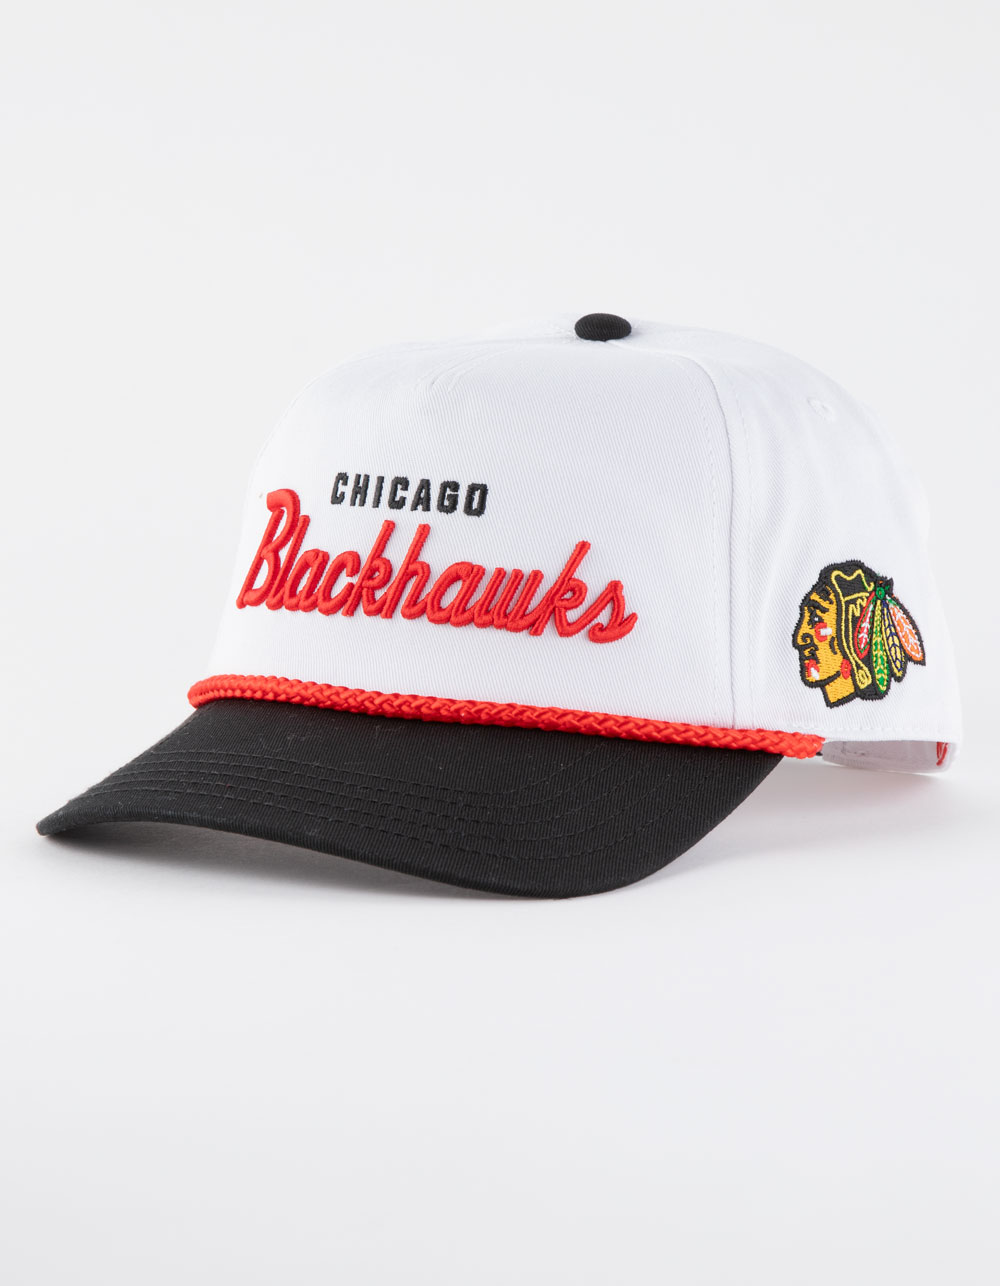 AMERICAN NEEDLE Roscoe Chicago Blackhawks Mens Snapback Hat